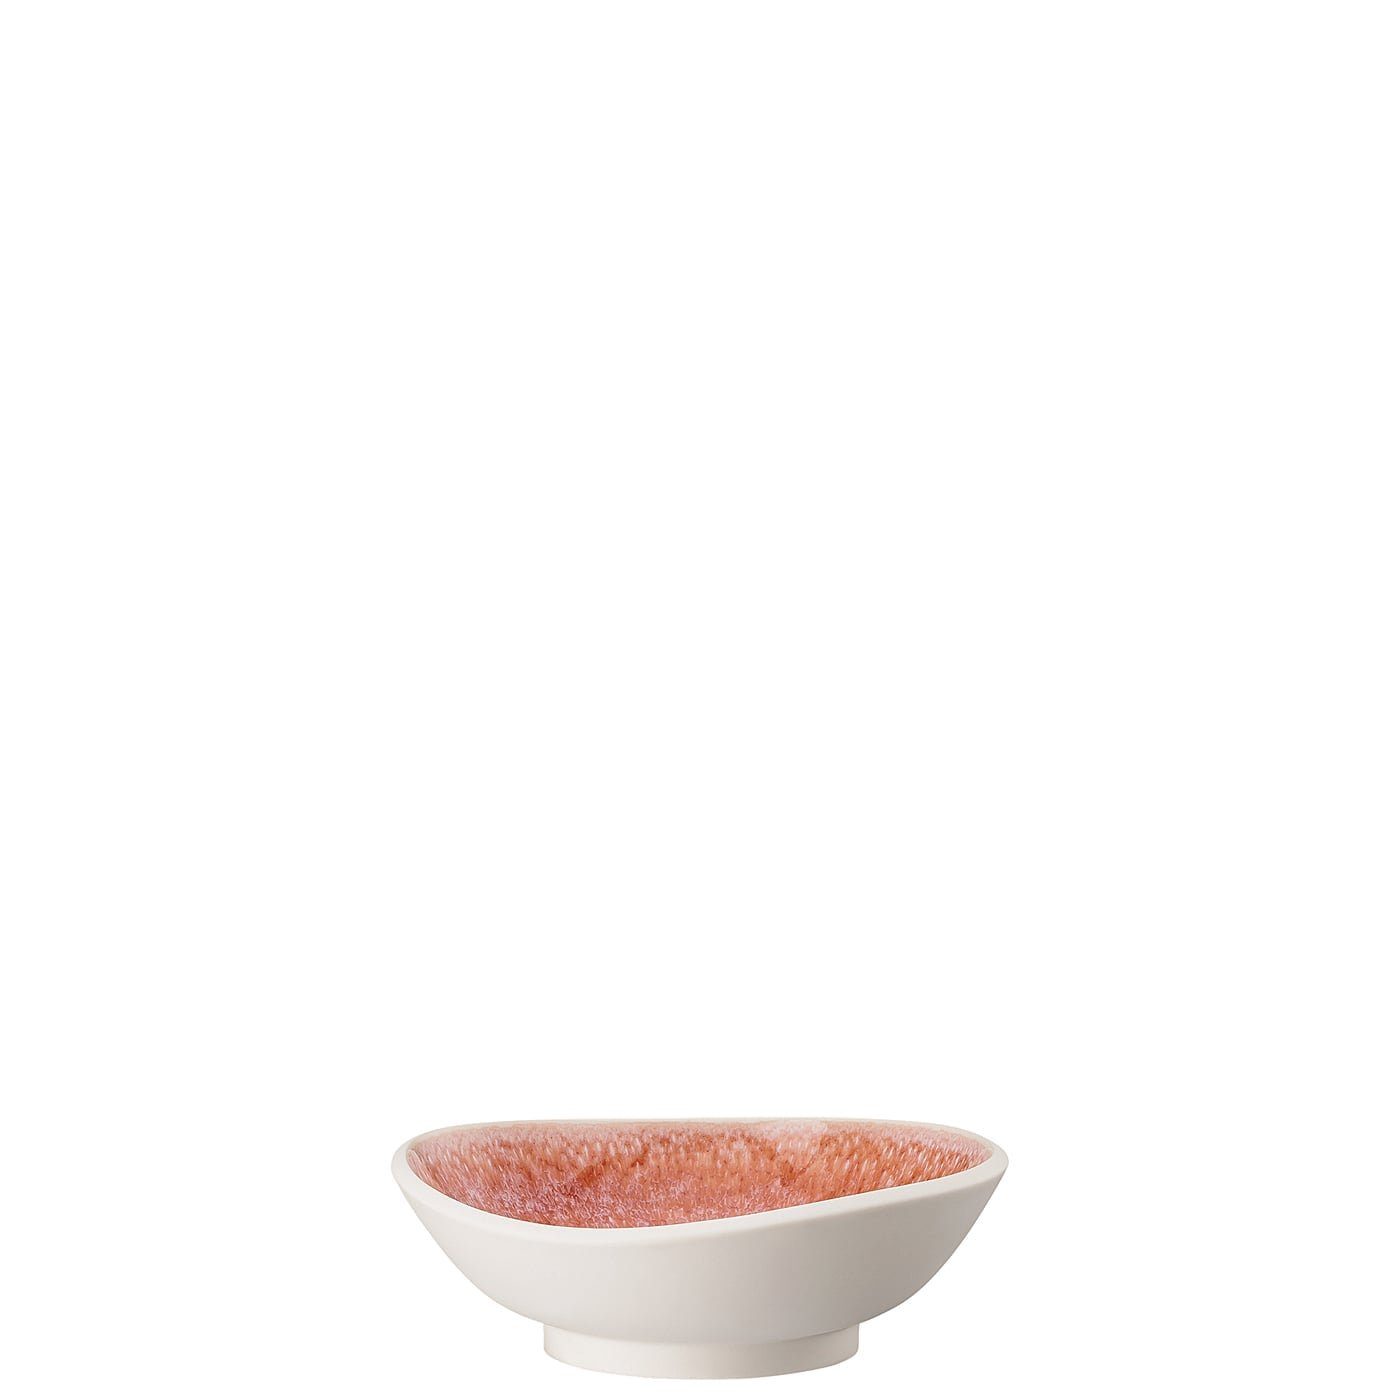 Rosenthal Schale Junto Rose Quartz Bowl 15 cm, Steinzeug, mikrowellengeeignet